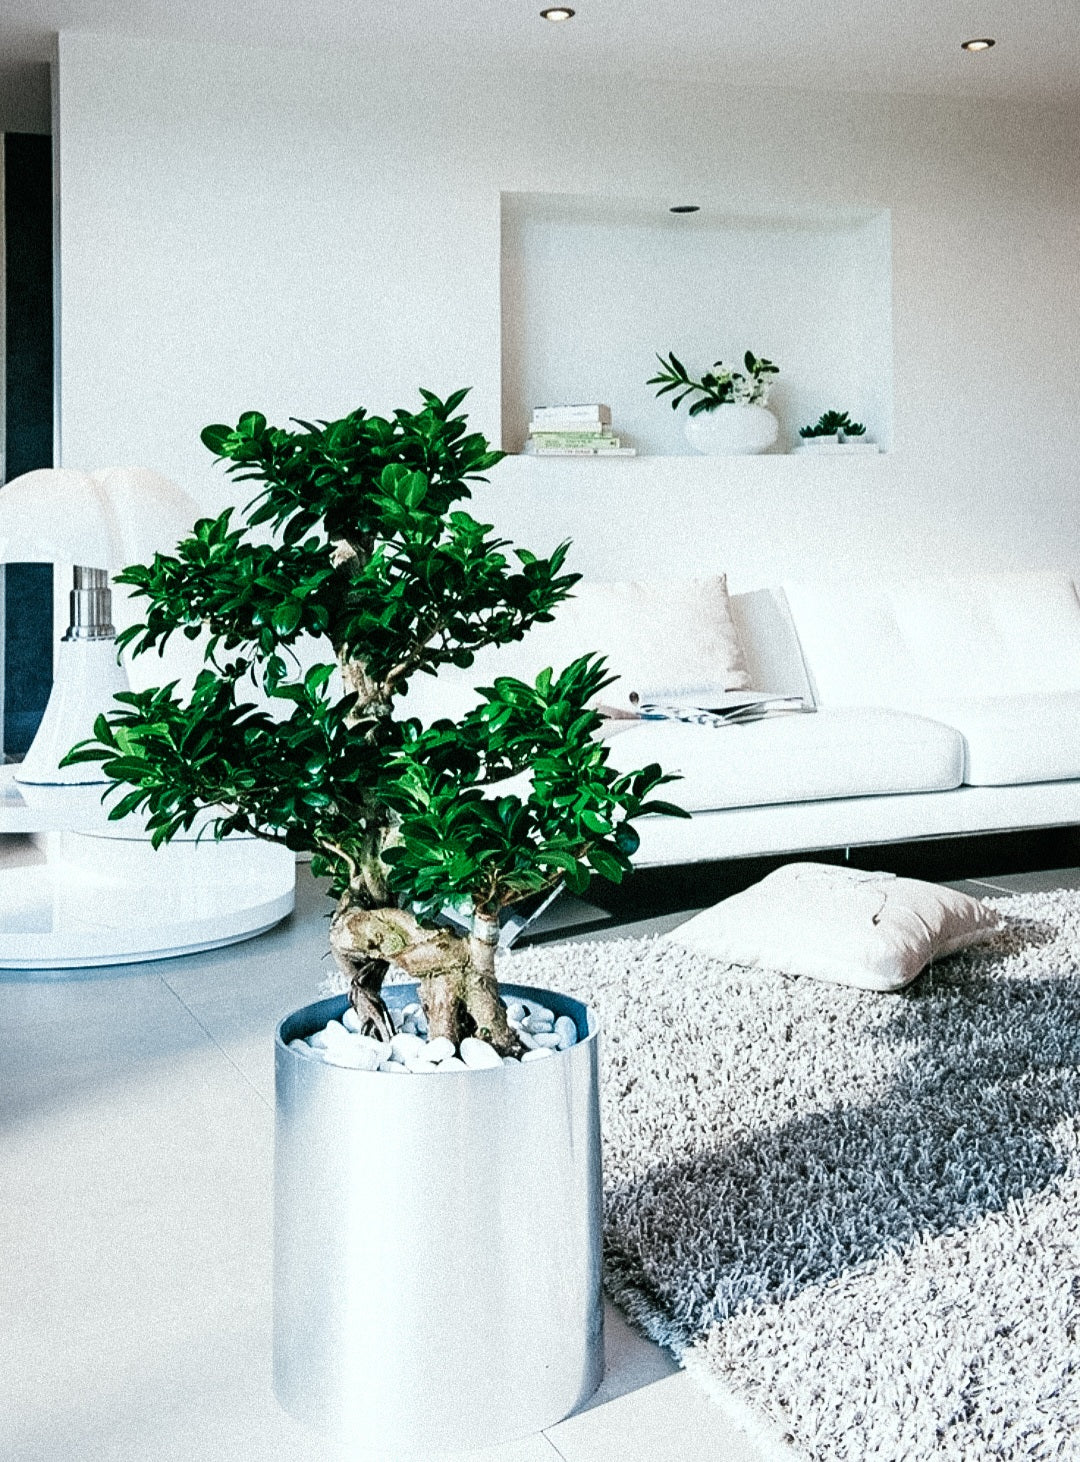 Ficus Bonsai 'Japanese shape'